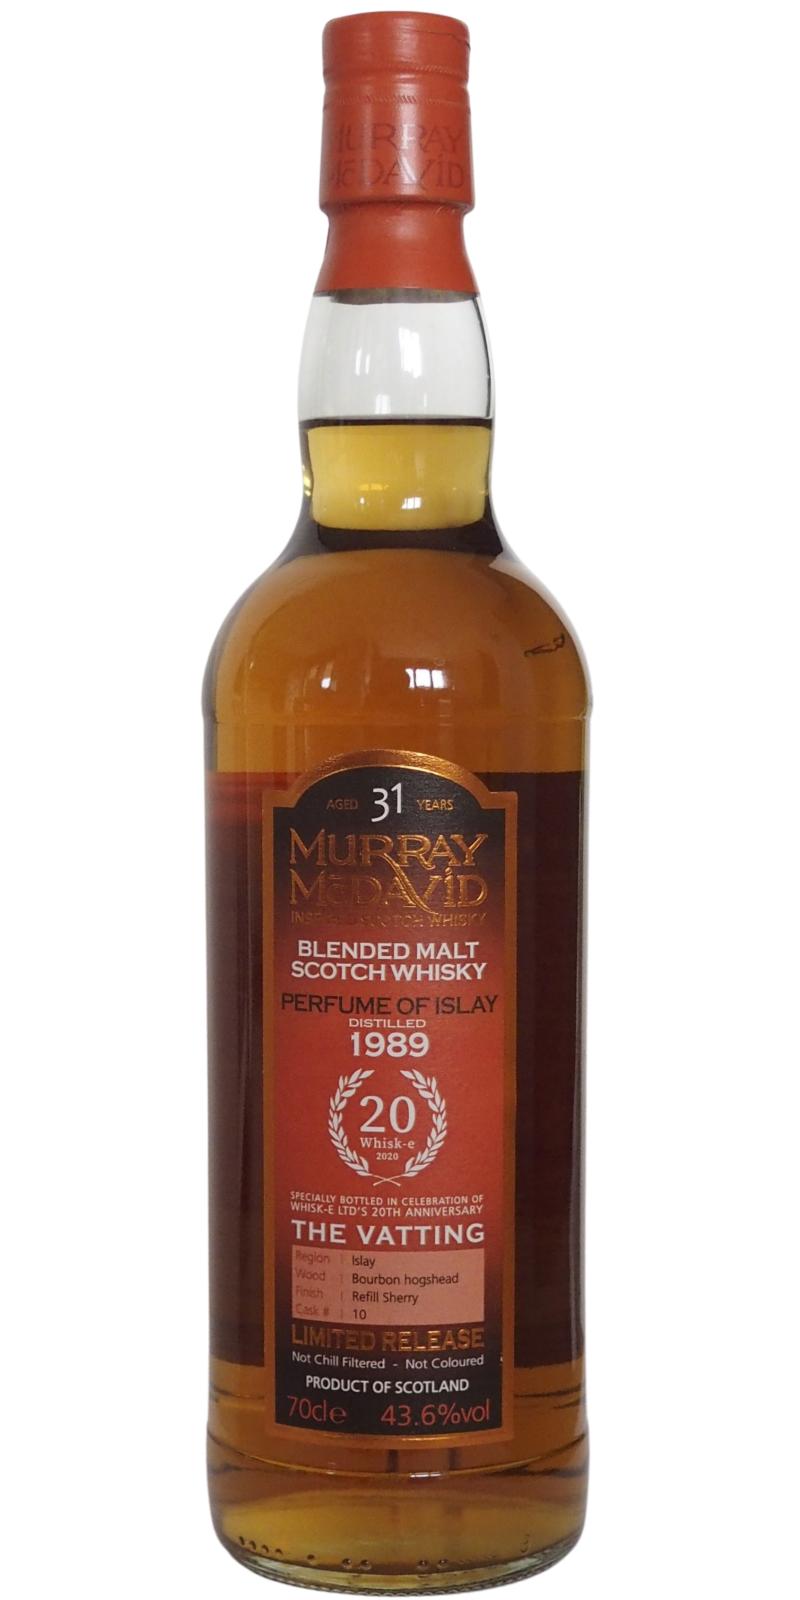 Blended Malt Scotch Whisky 1989 MM Perfume of Islay Refill Sherry #10 Whisk-e Ltd's 20th Anniversary 43.6% 700ml